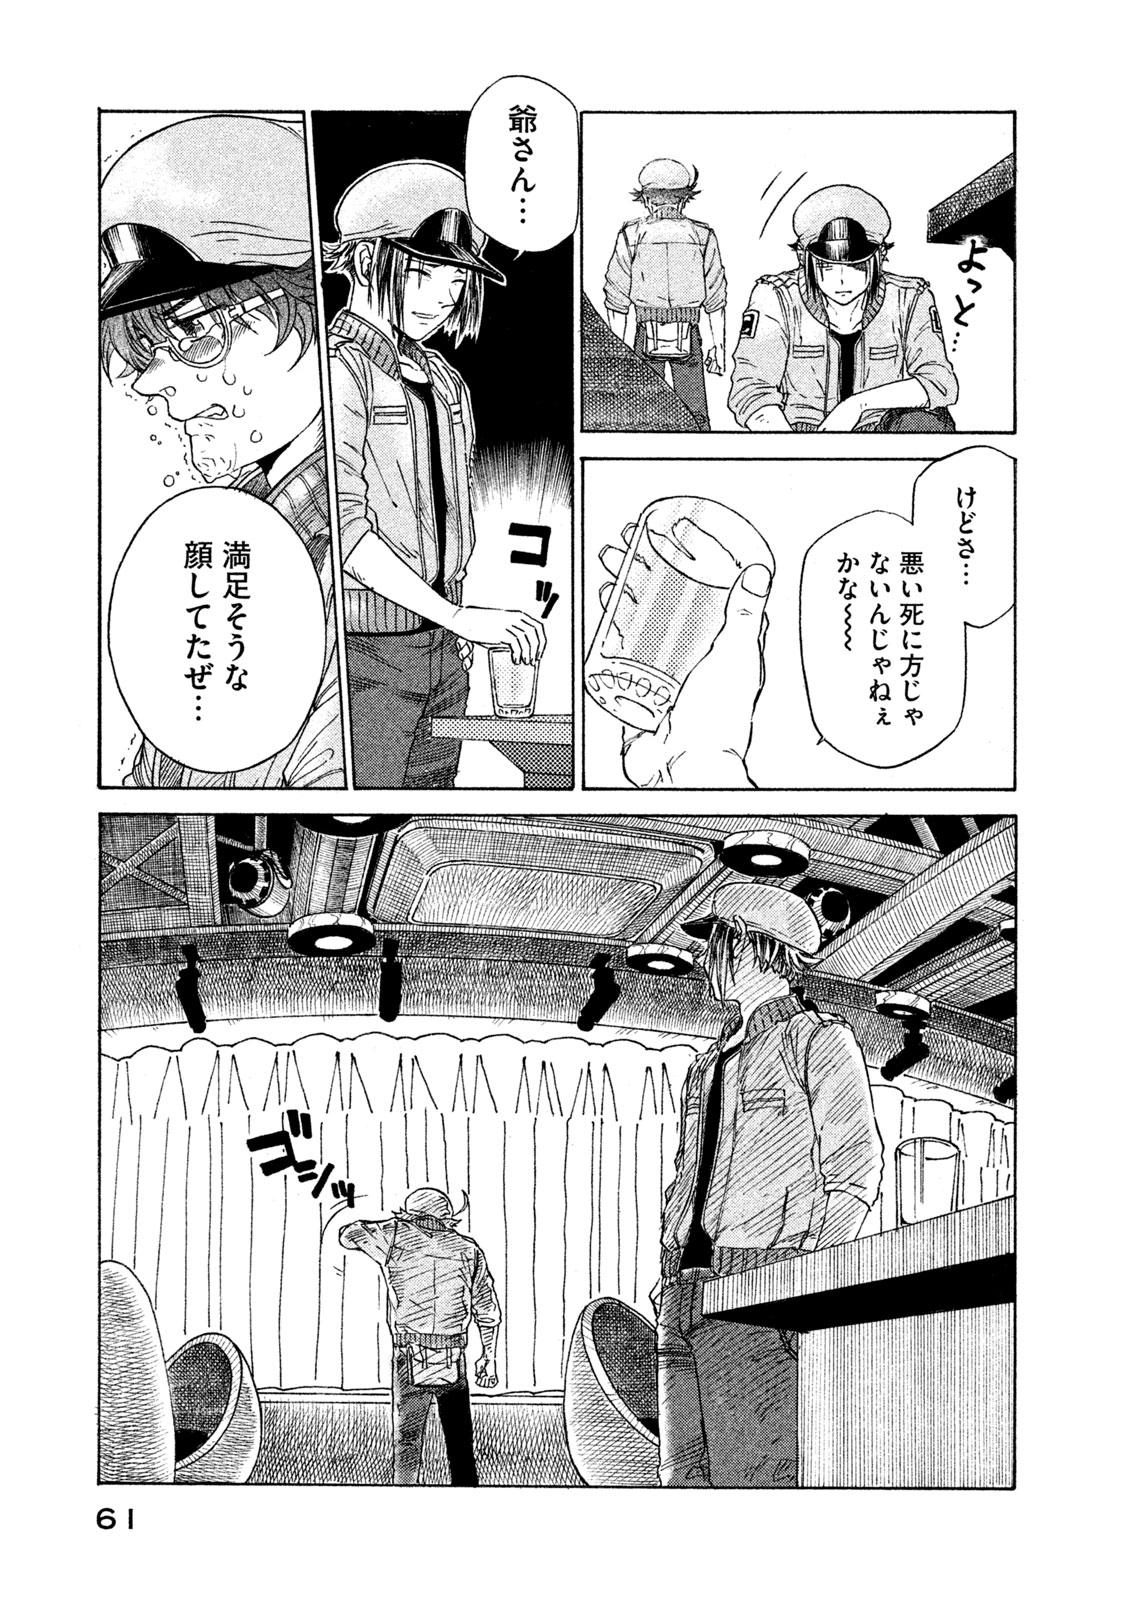 Hataraku Saibou BLACK - Chapter 2 - Page 25